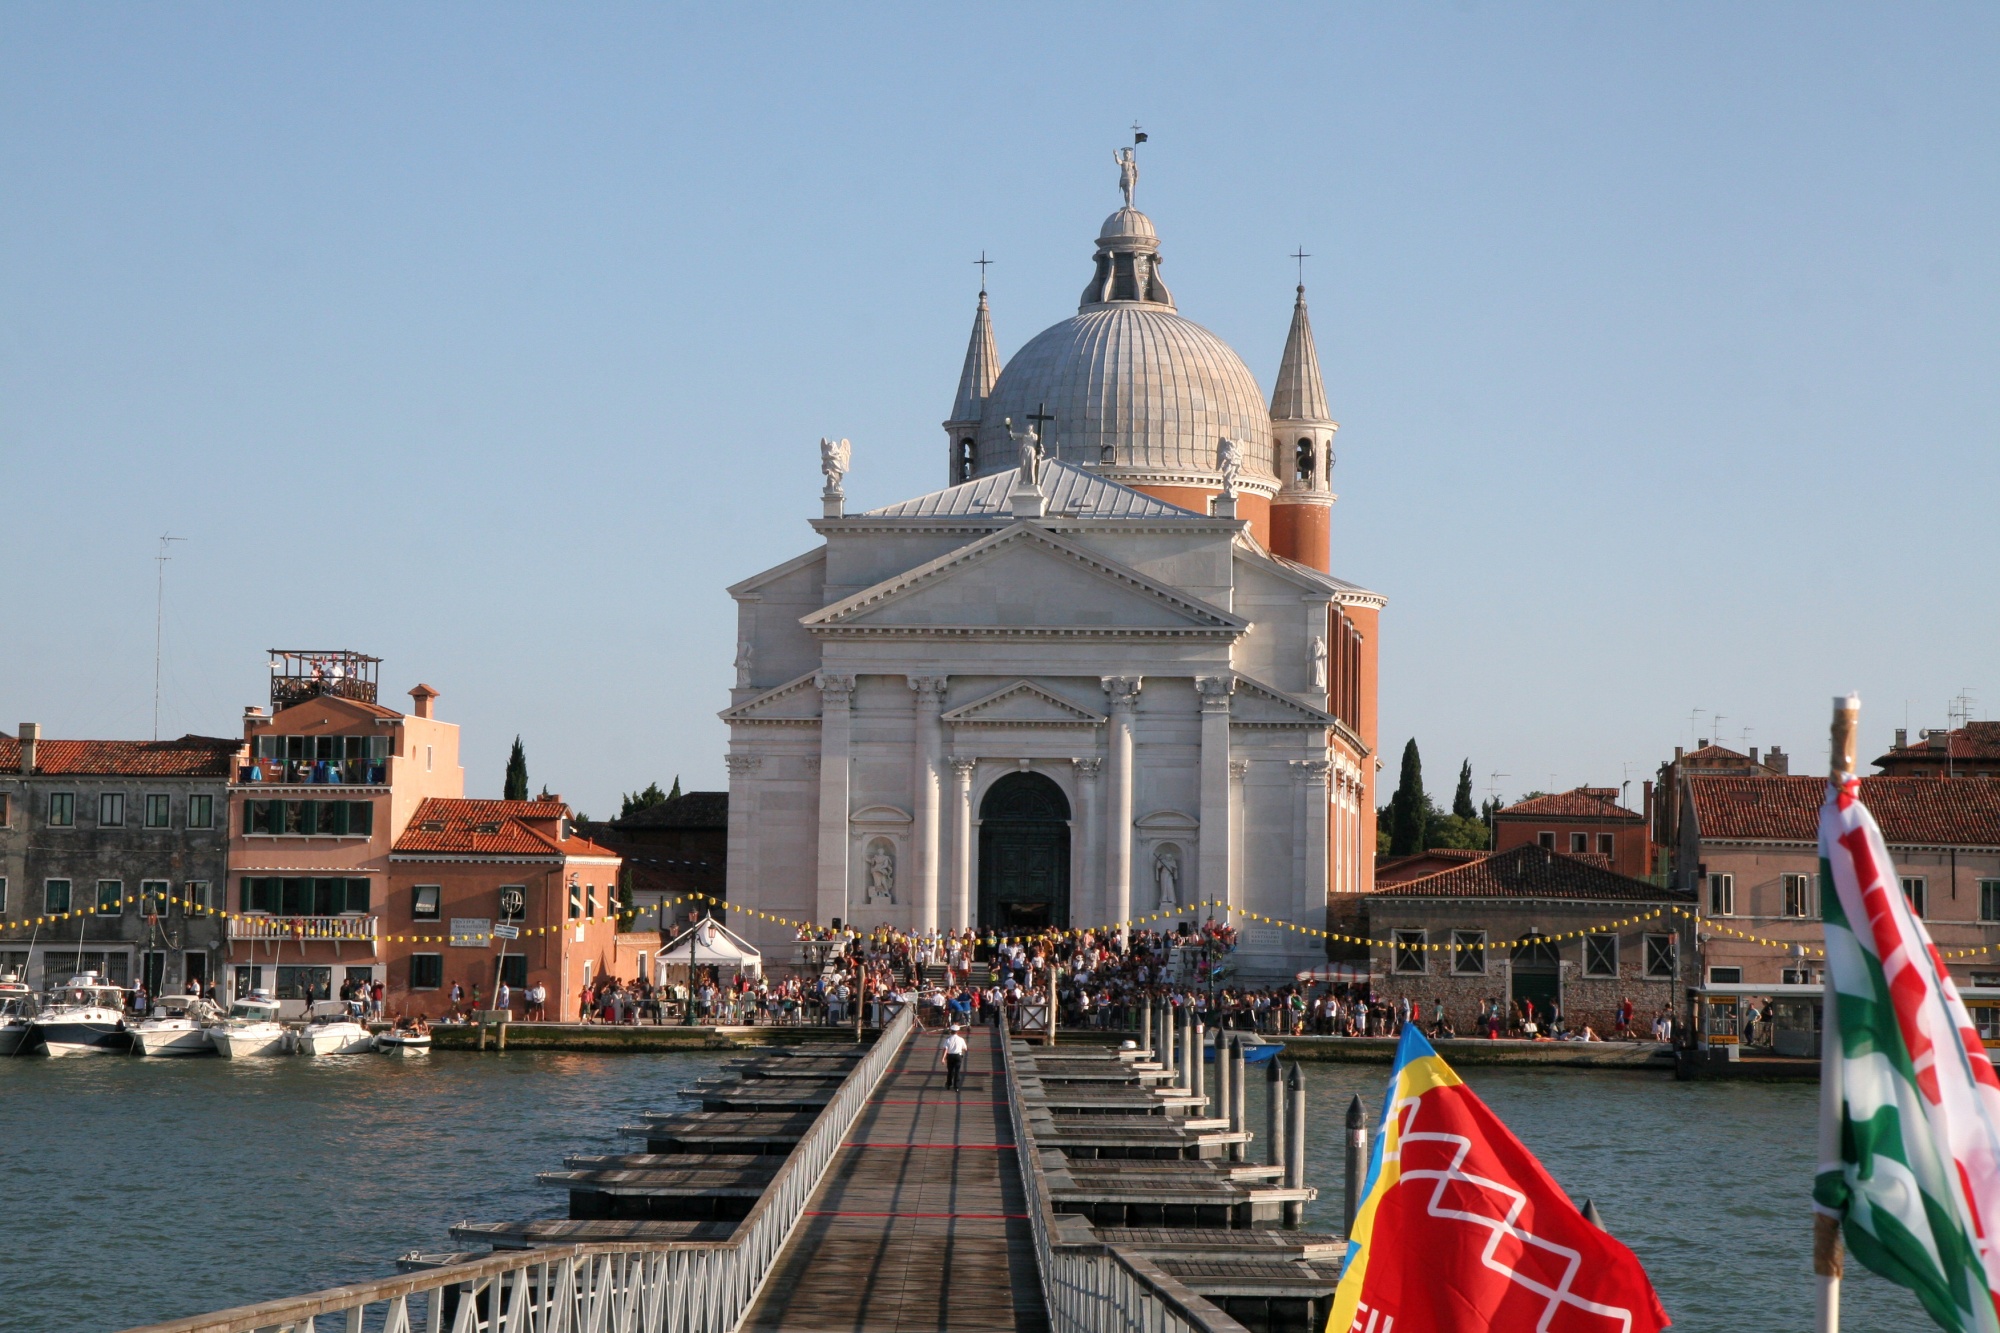 redentore a venezia - la chiesa del redentore